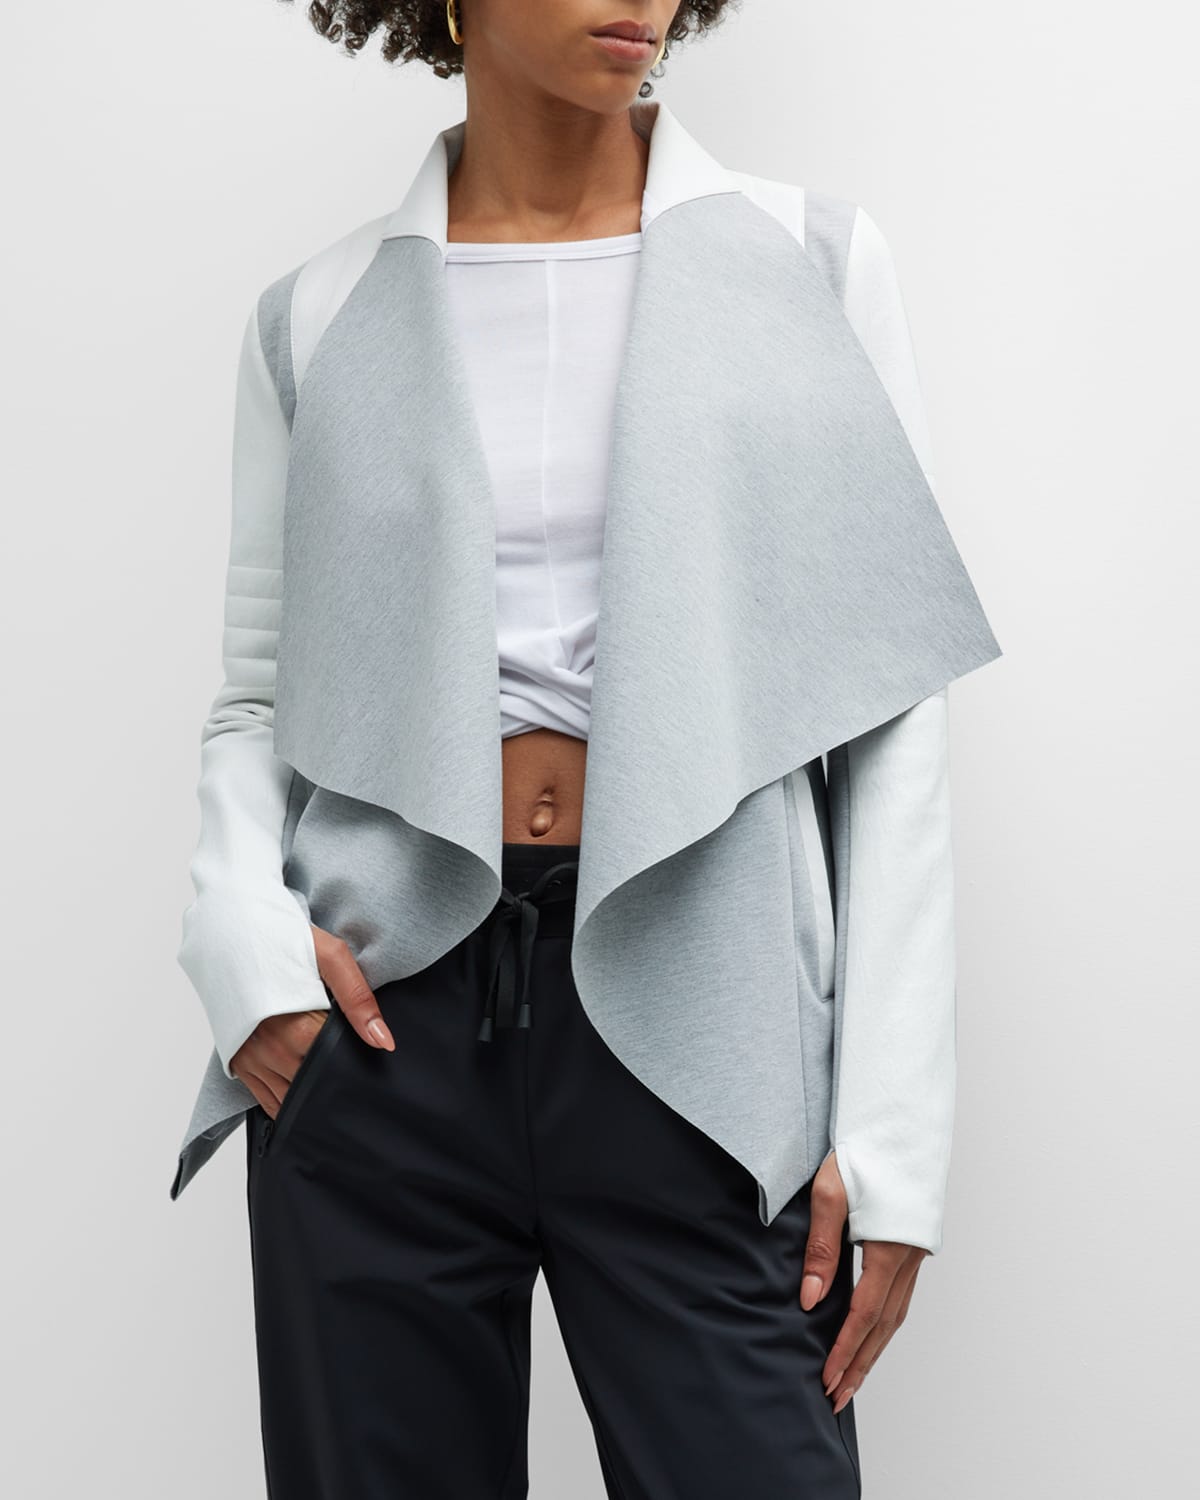 Blanc Noir Drape-Front Quilted Faux-Leather Jacket